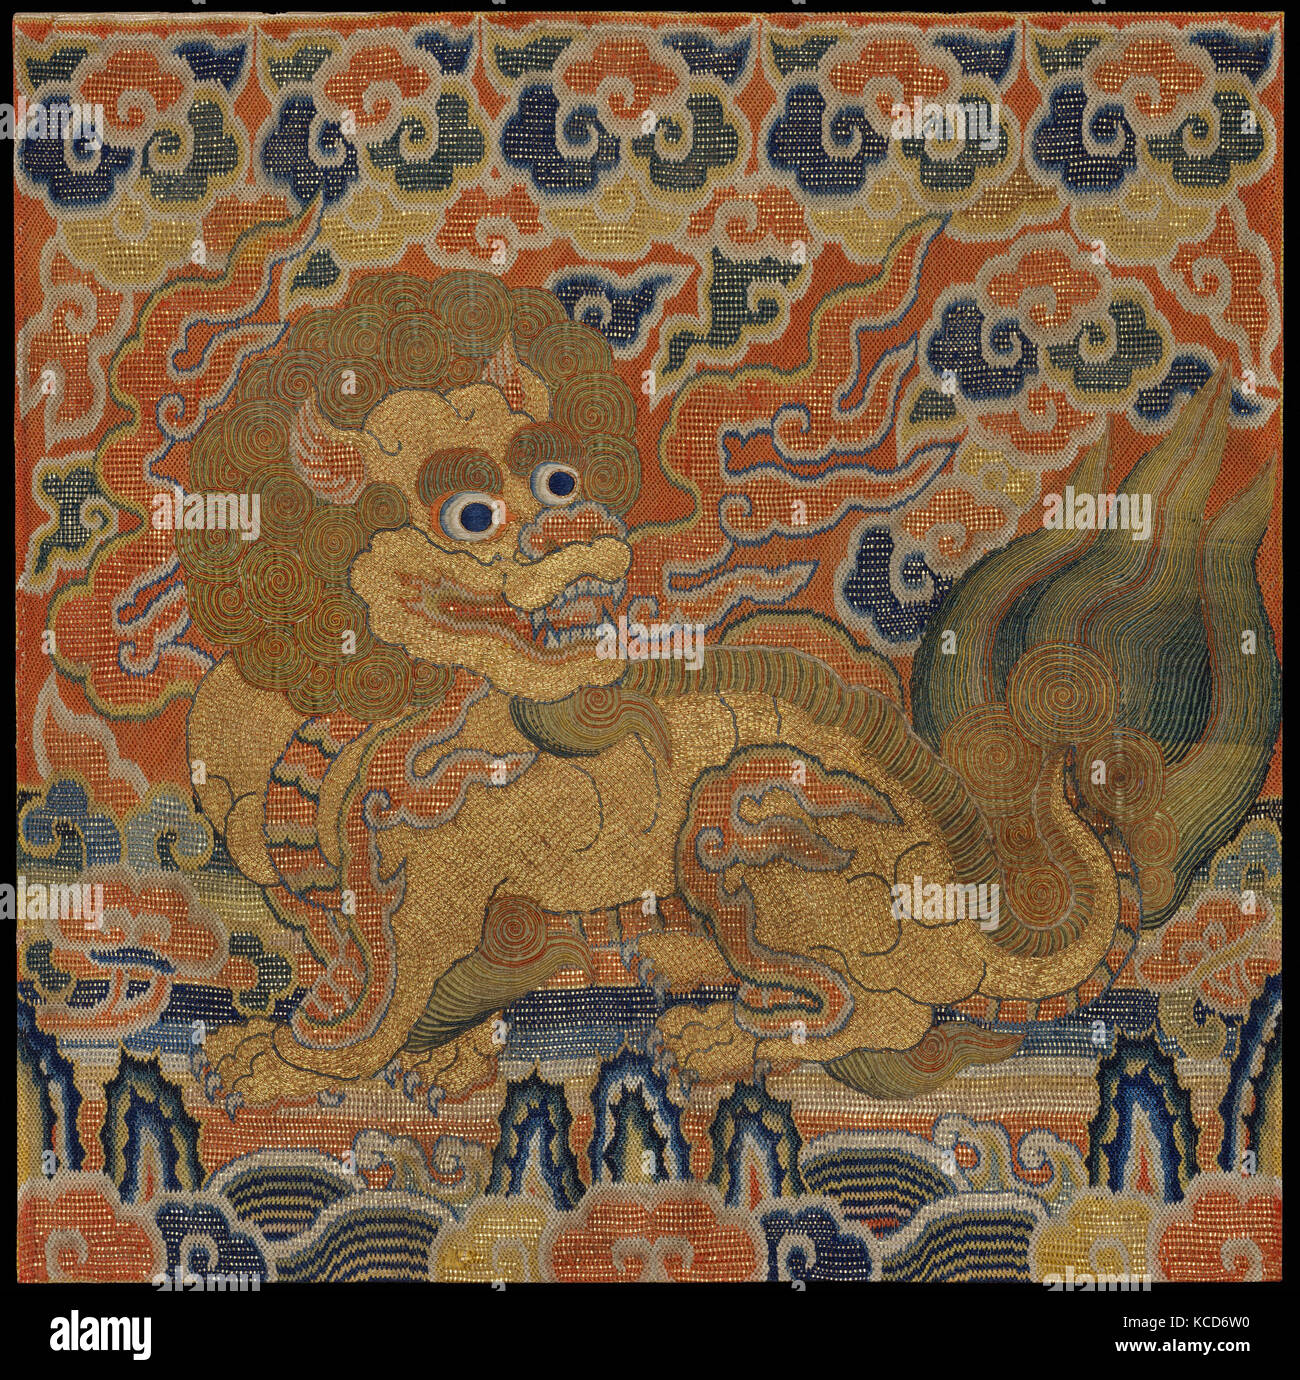 明早期 刺繡獅子補, le rang d'un insigne avec Lion, dynastie Ming (1368-1644), 15e siècle, la Chine, la soie et la broderie à fils métalliques Banque D'Images